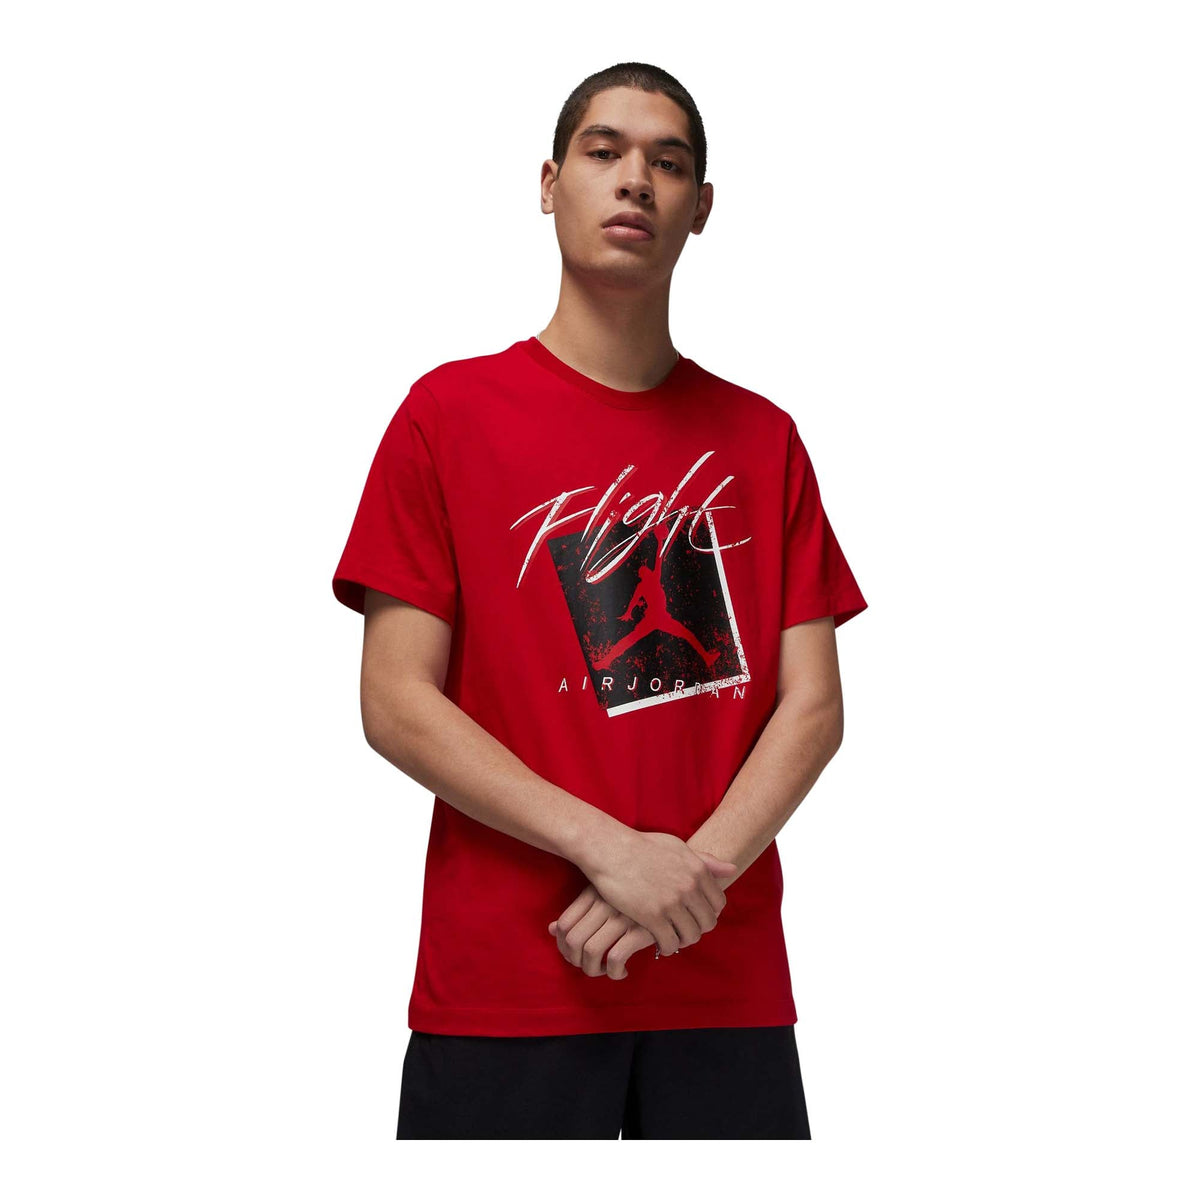 Jordan Brand Men's Graphic T-Shirt.